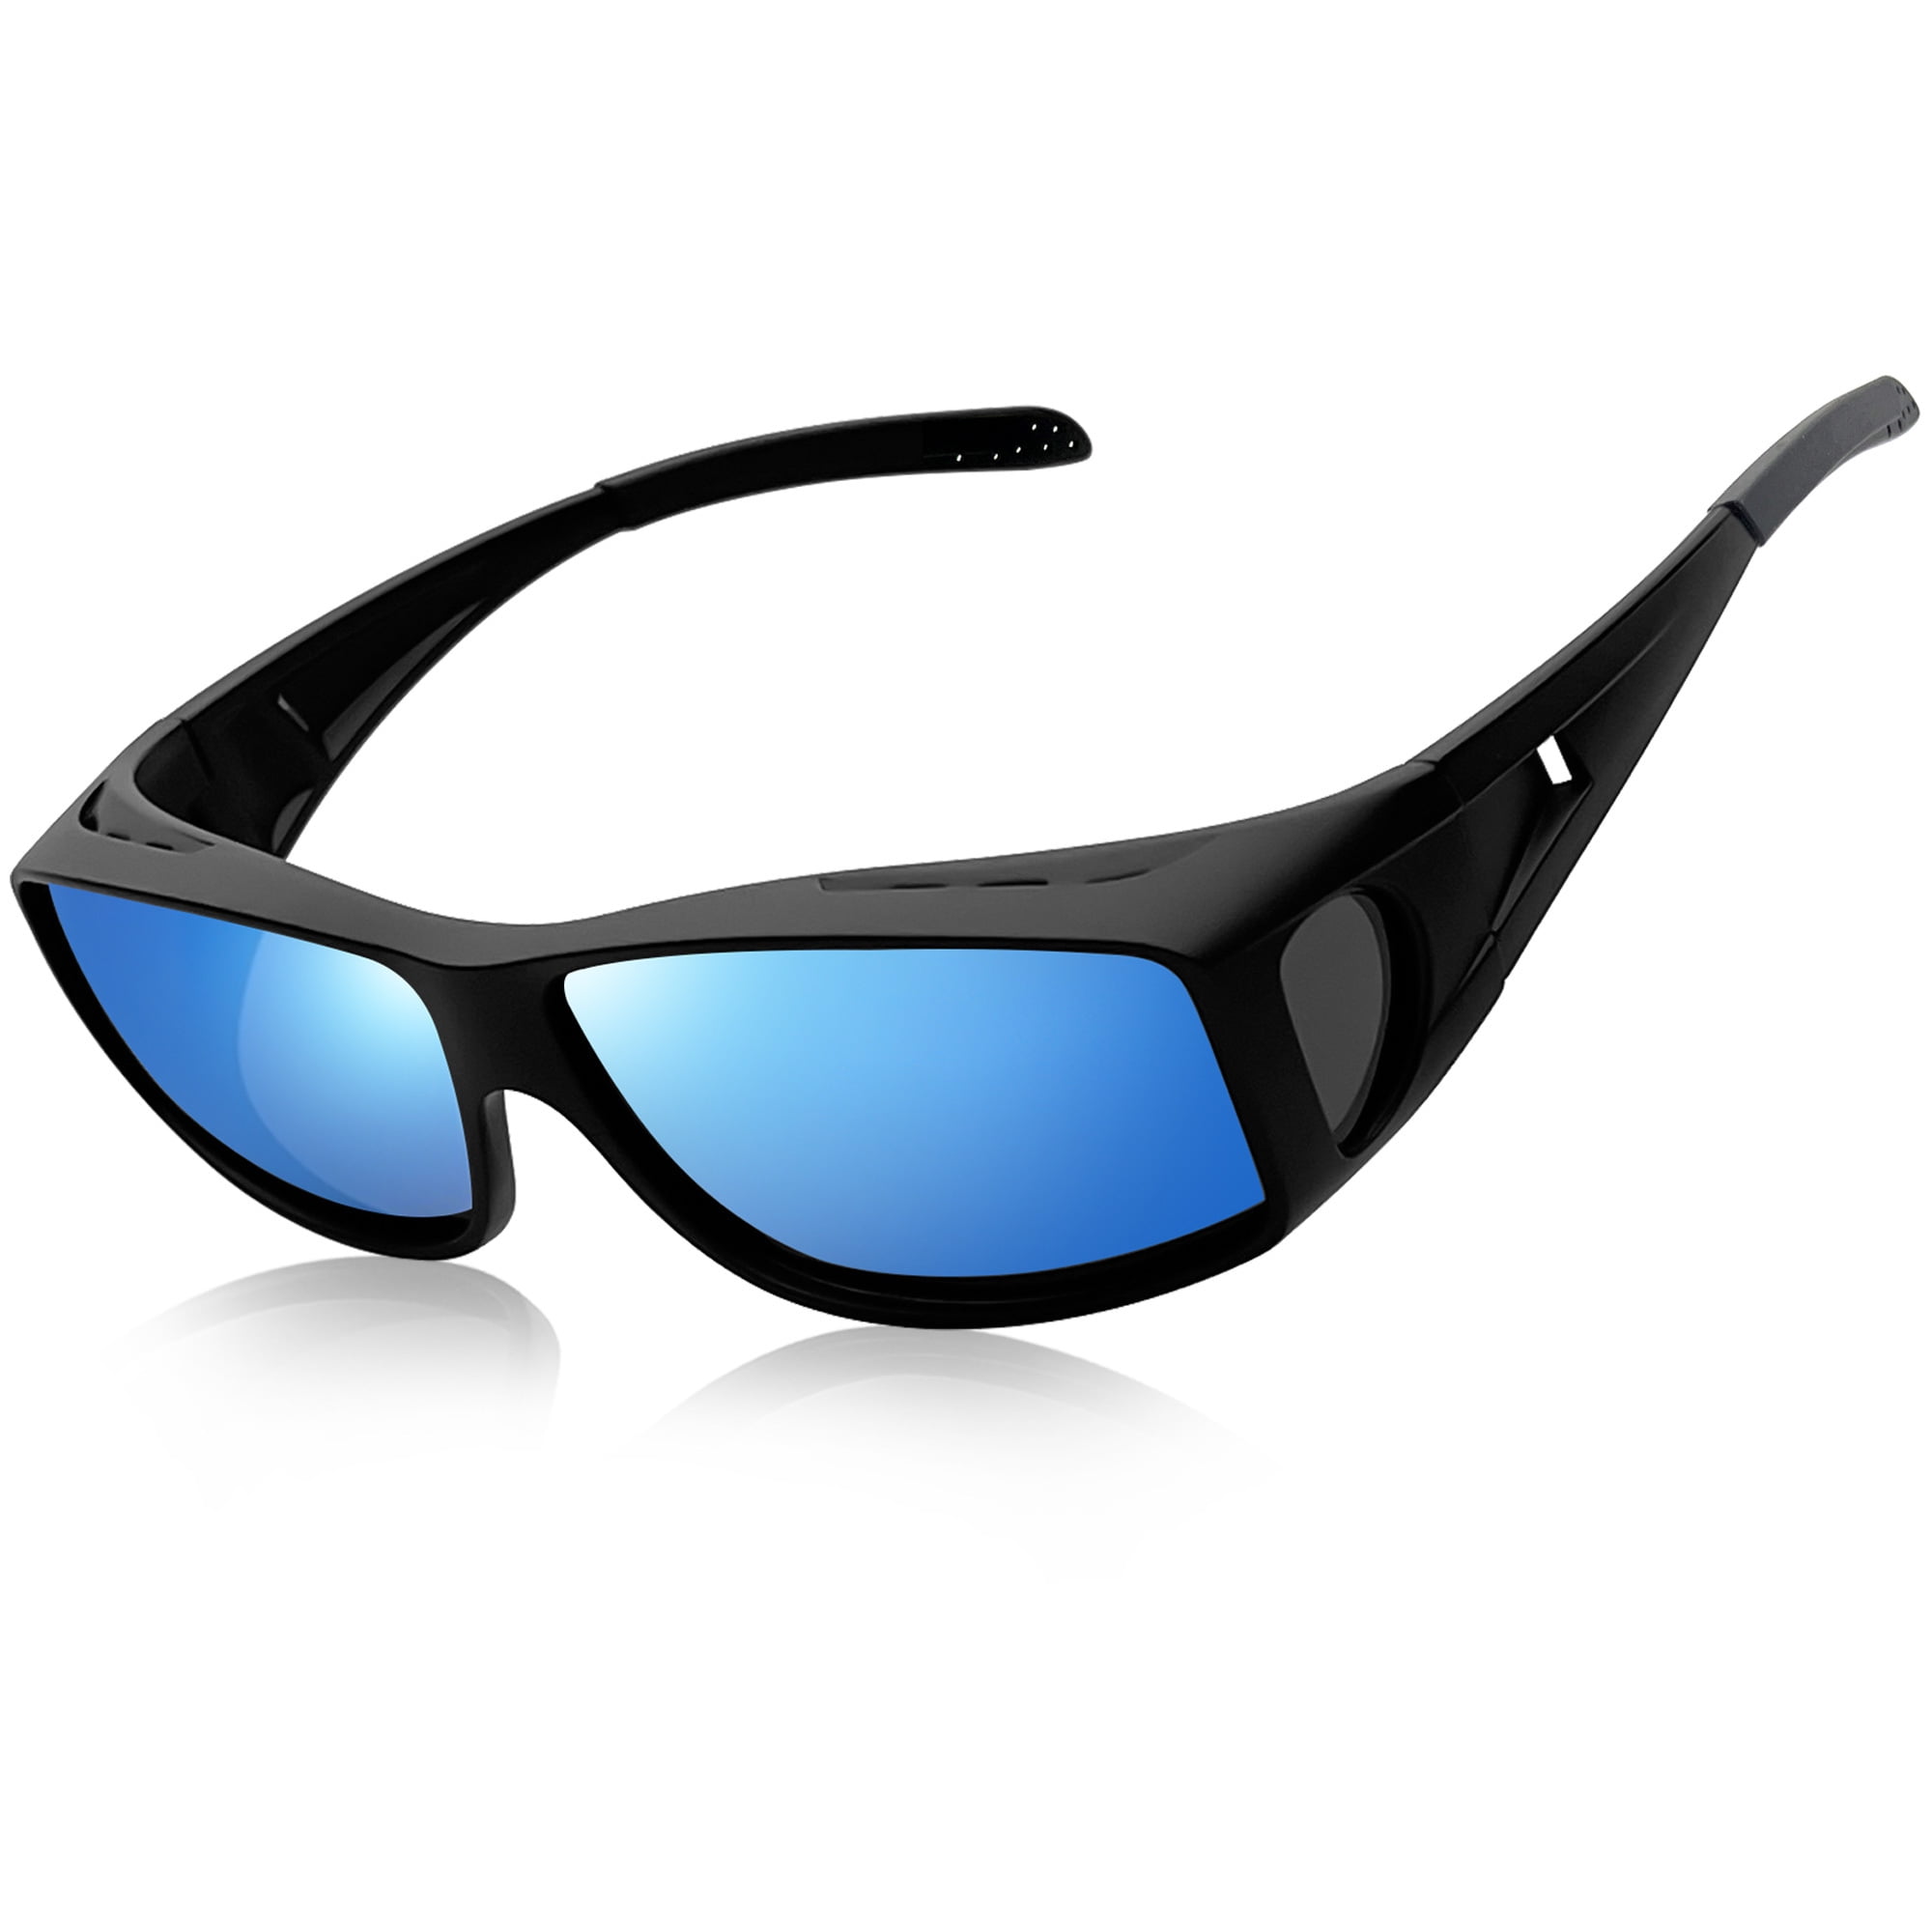 Joopin Polarized Sunglasses Fit Over Glasses for Men Women, Wrap